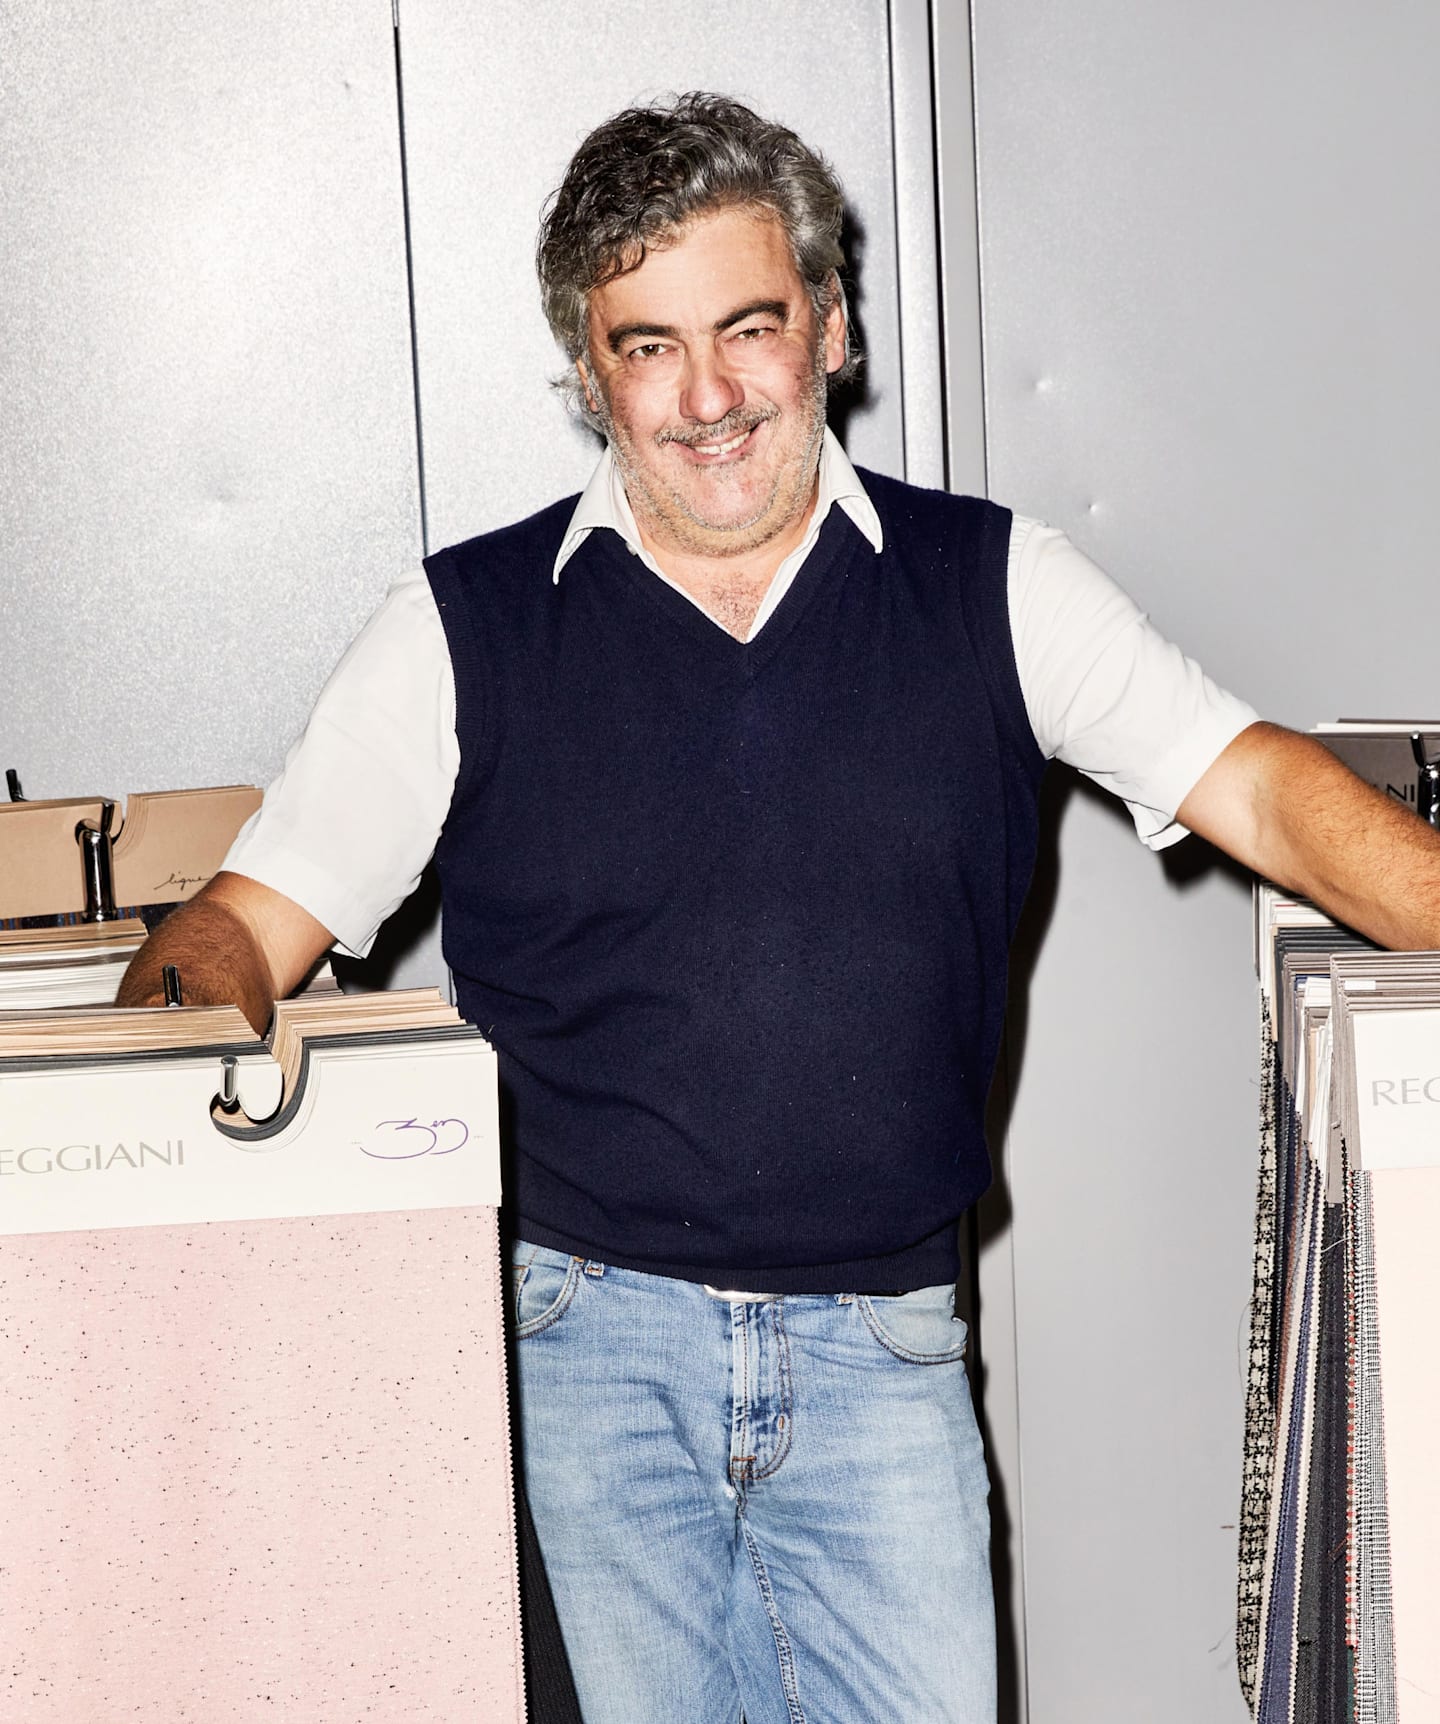 Giovanni Reggiani, CEO, Designer und Sohn des Gründers Attilio.